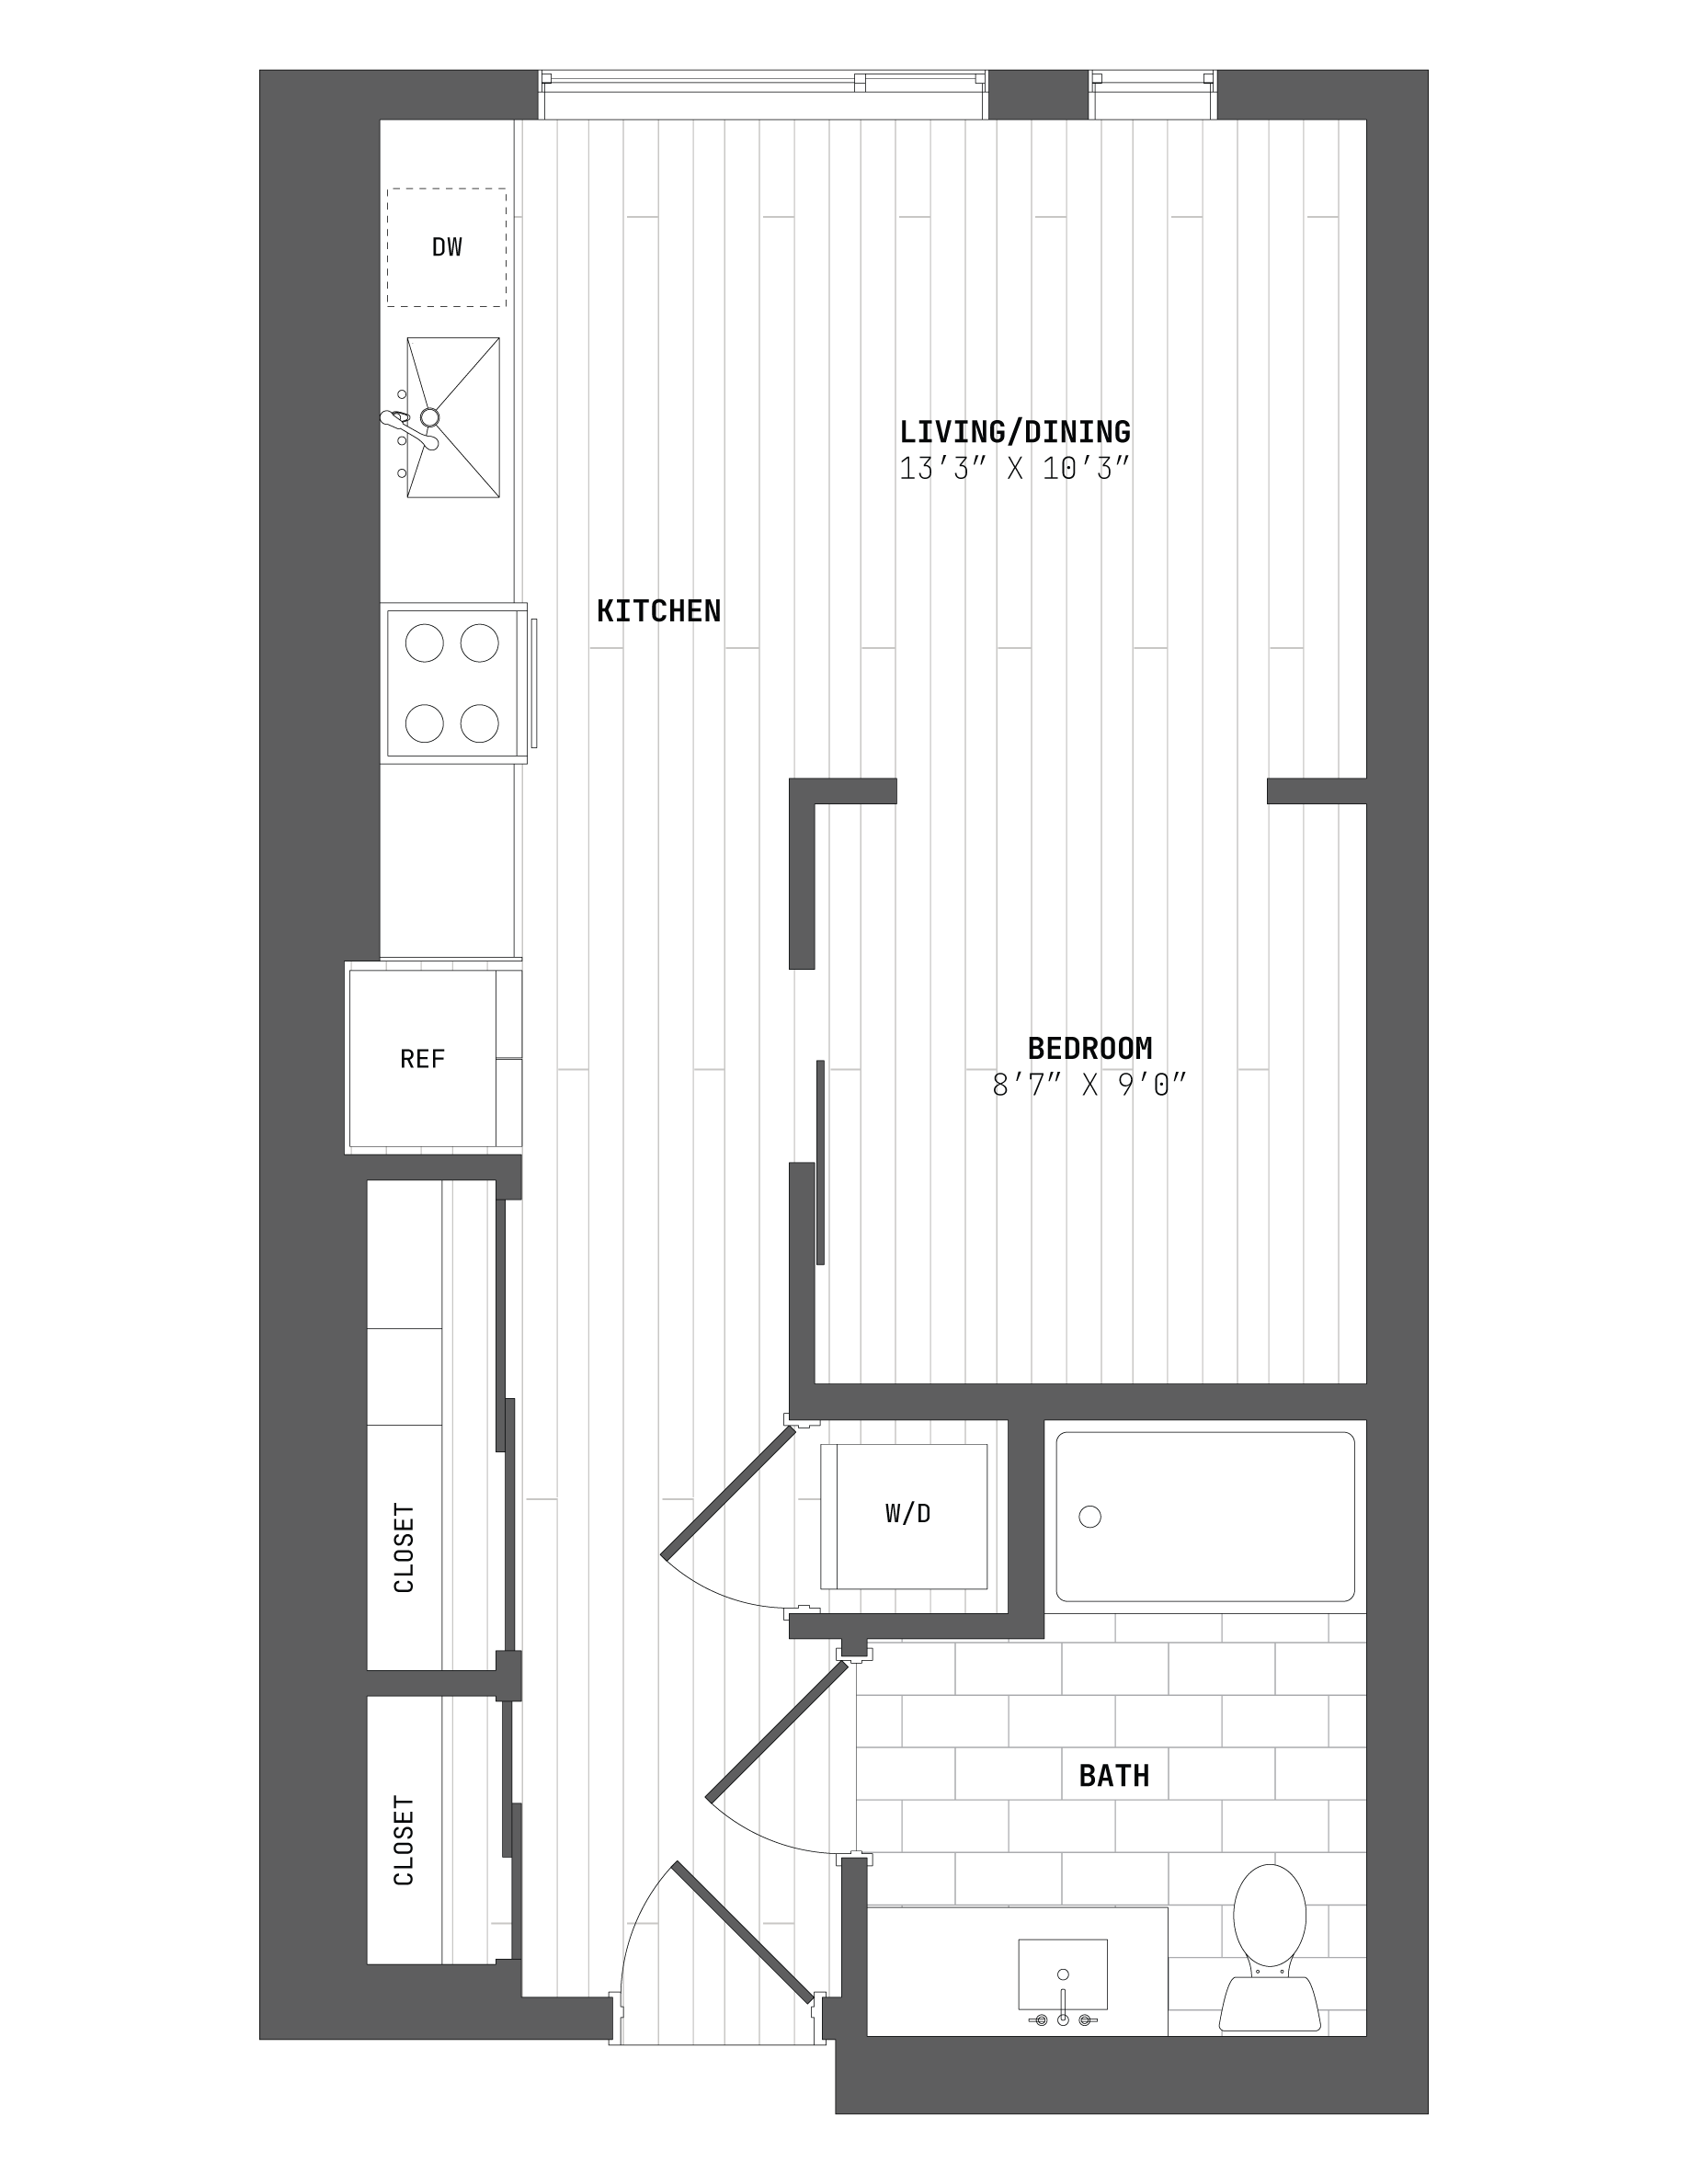 Apartment 4785230 floorplan